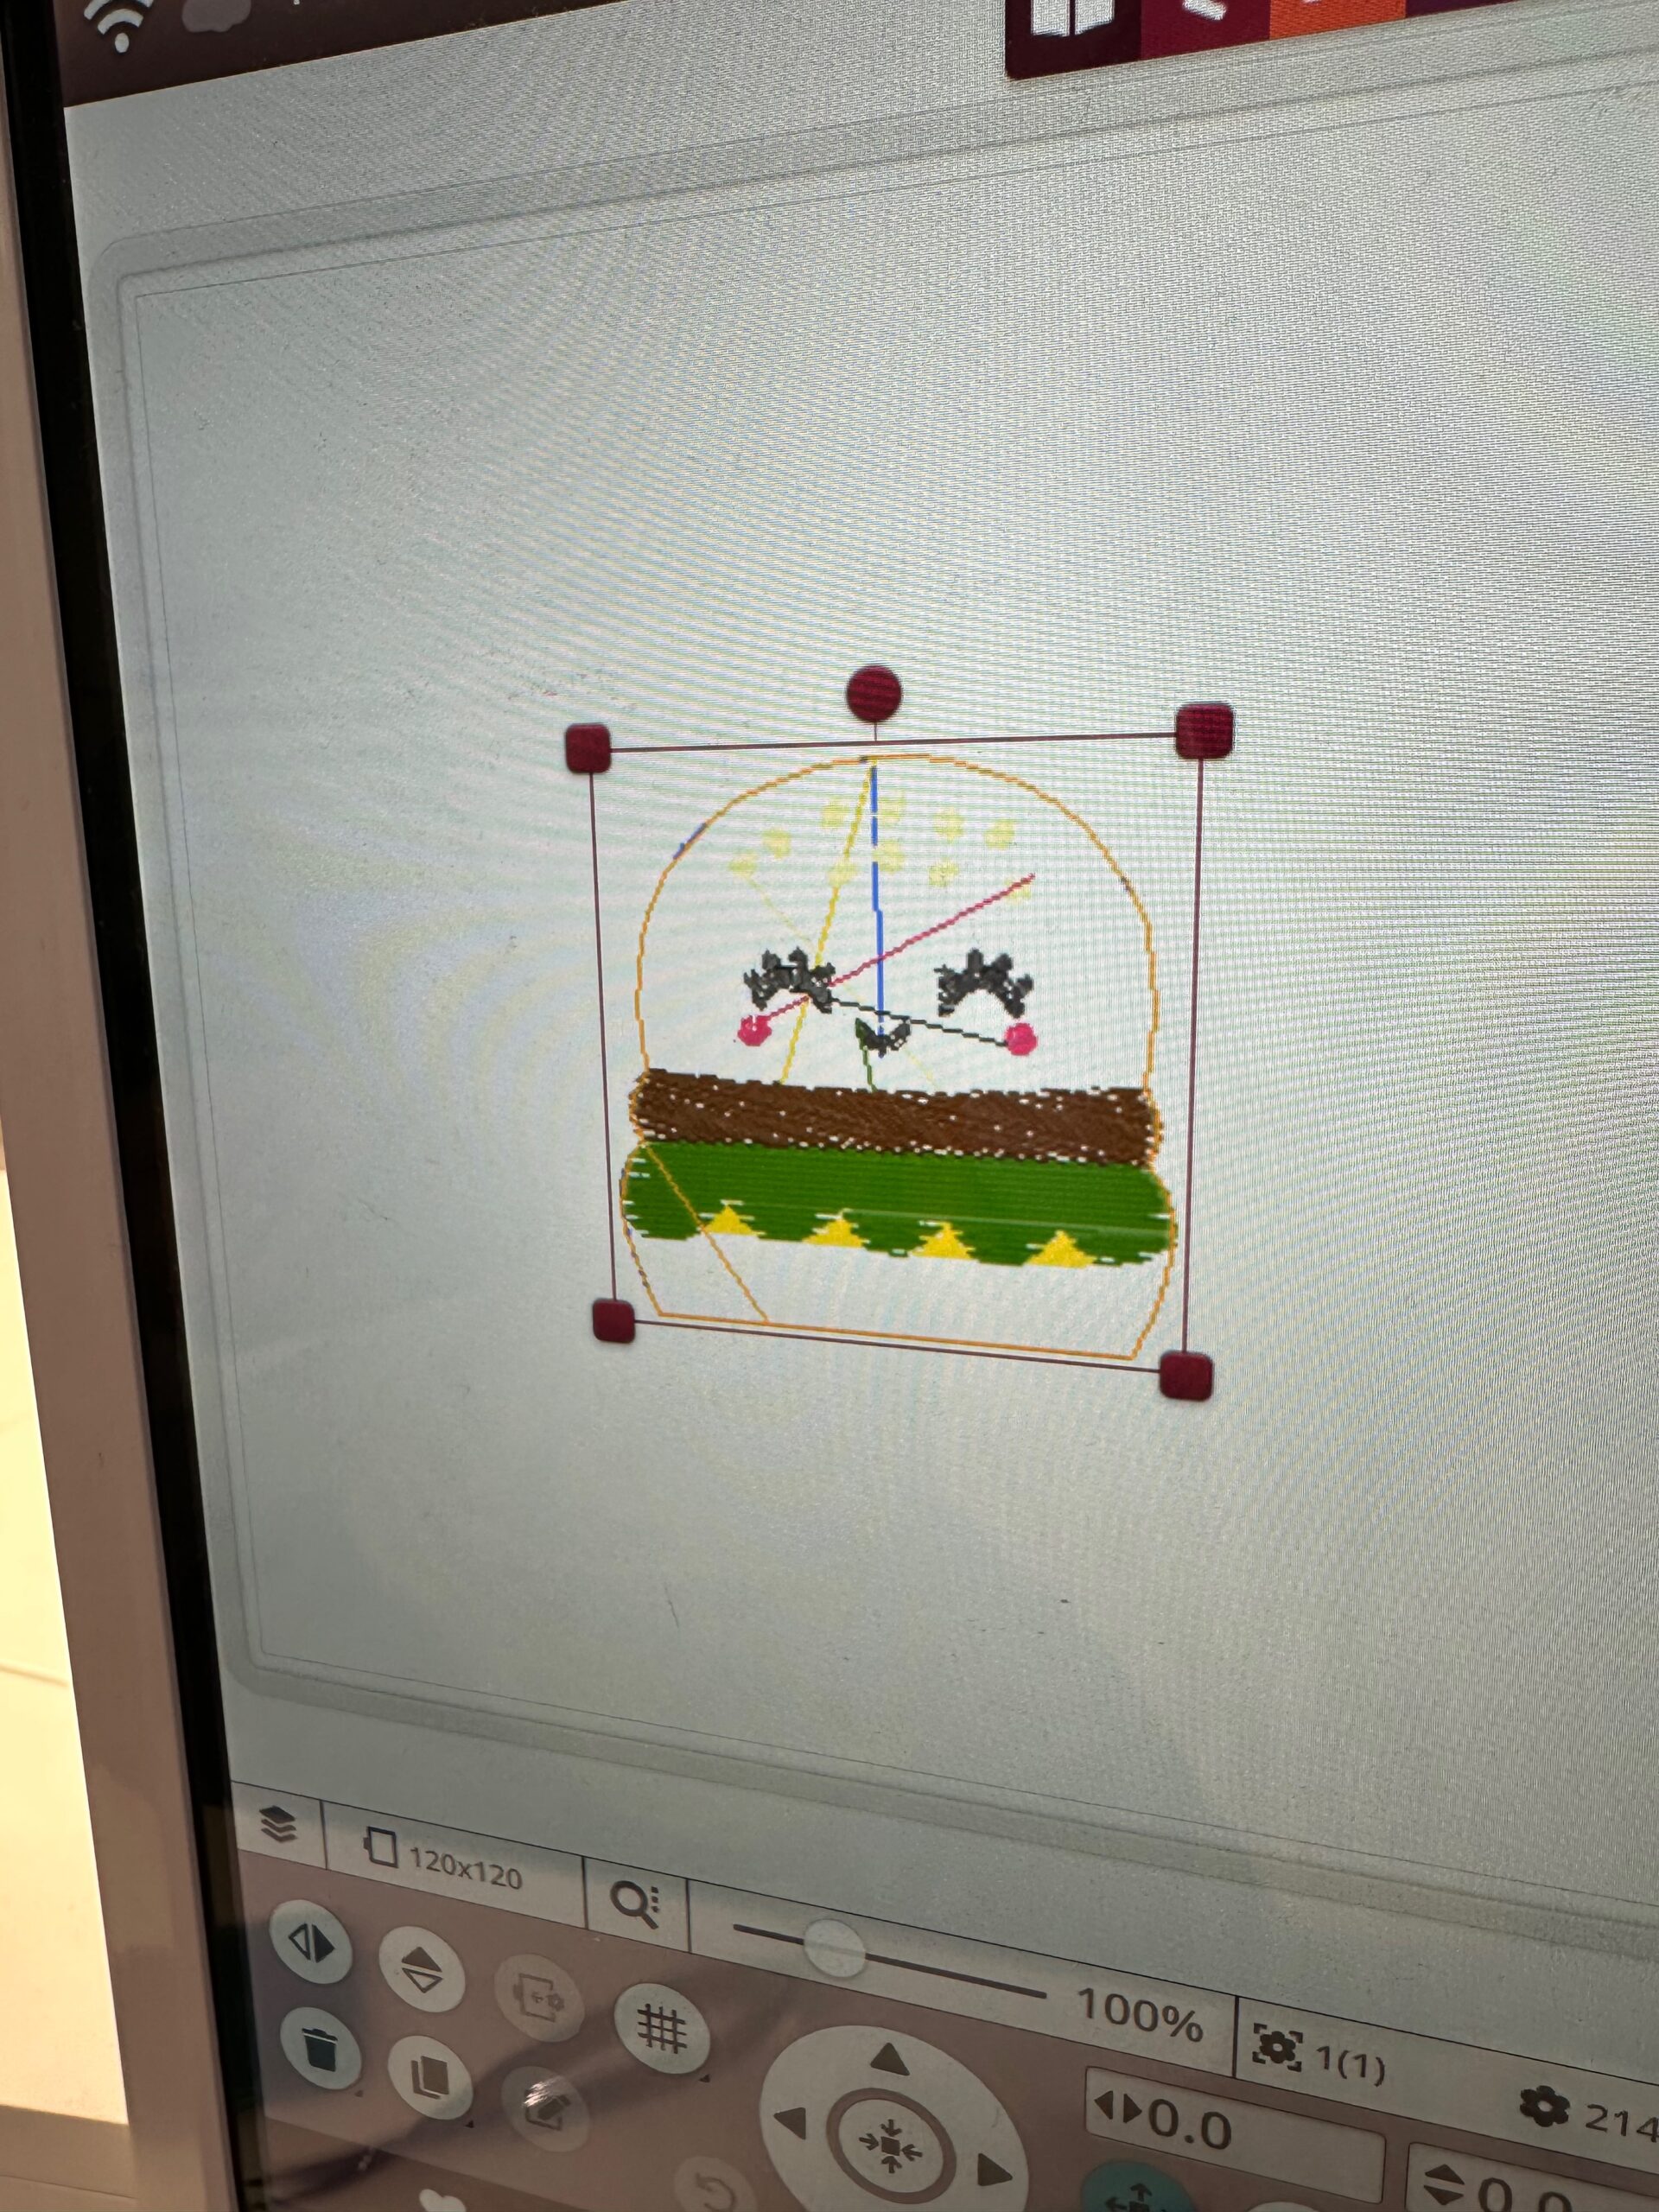 cheeseburger design on machine screen